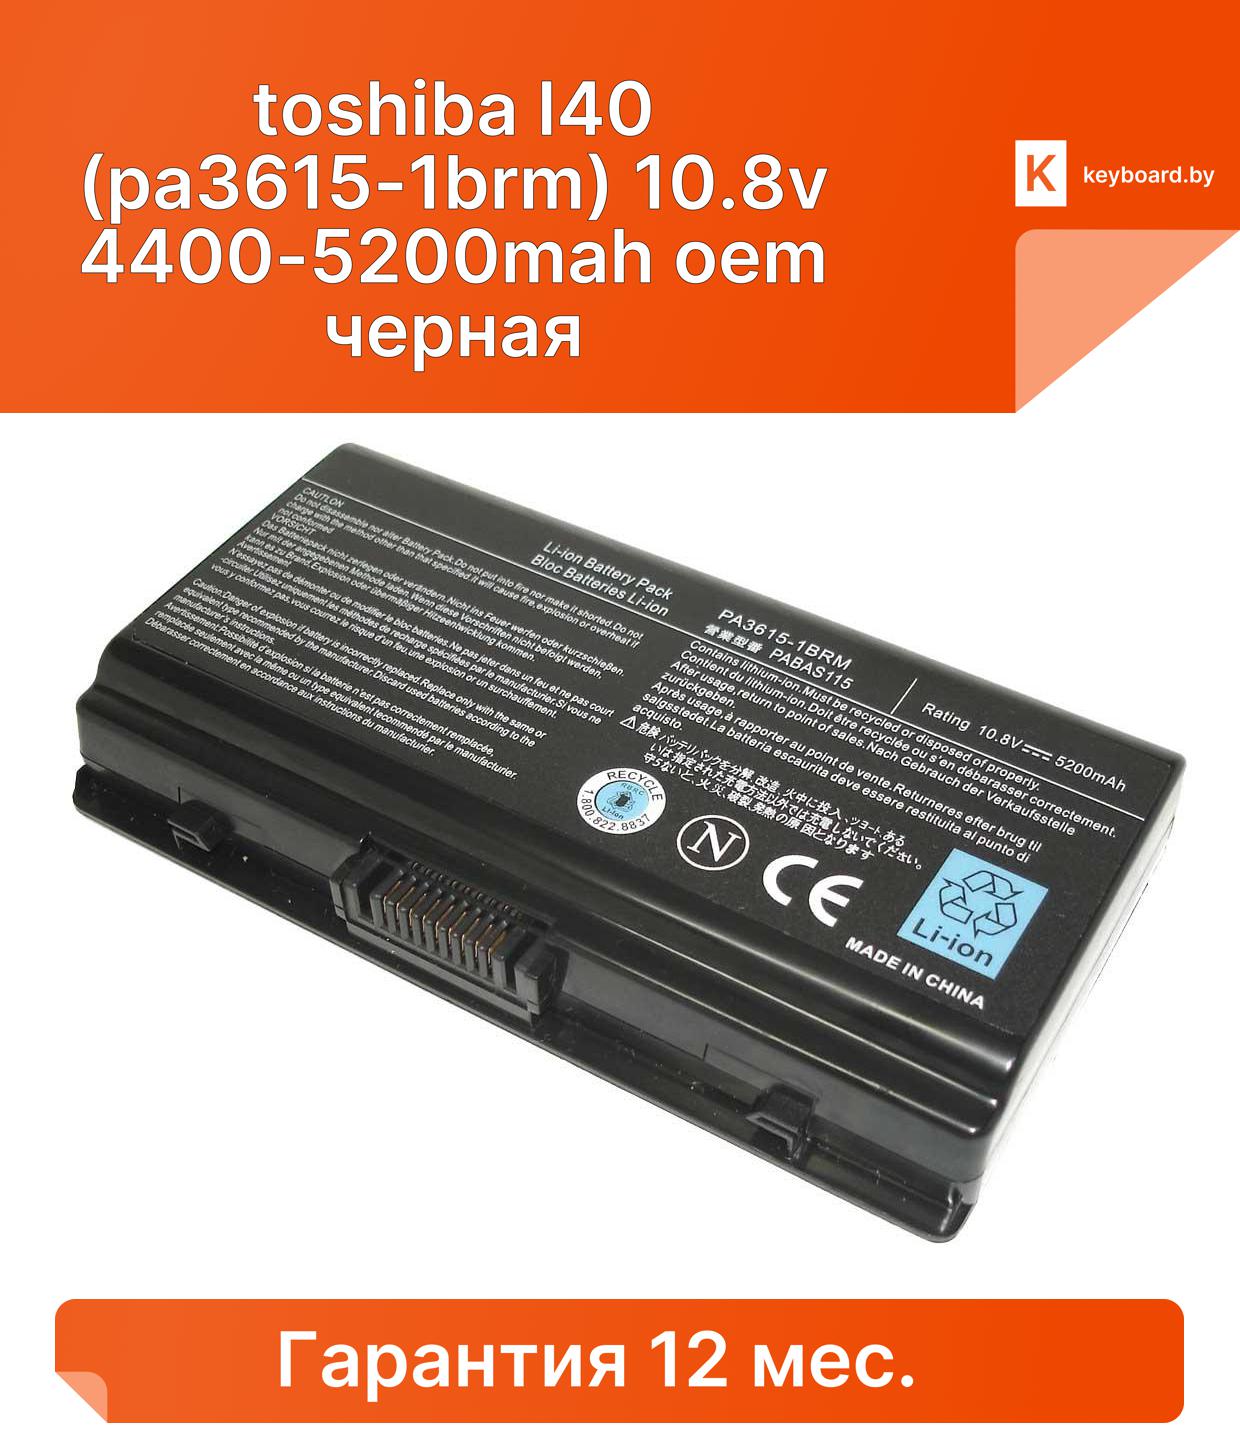 Аккумуляторная батарея для ноутбука toshiba l40 (pa3615-1brm) 10.8v 4400-5200mah oem черная